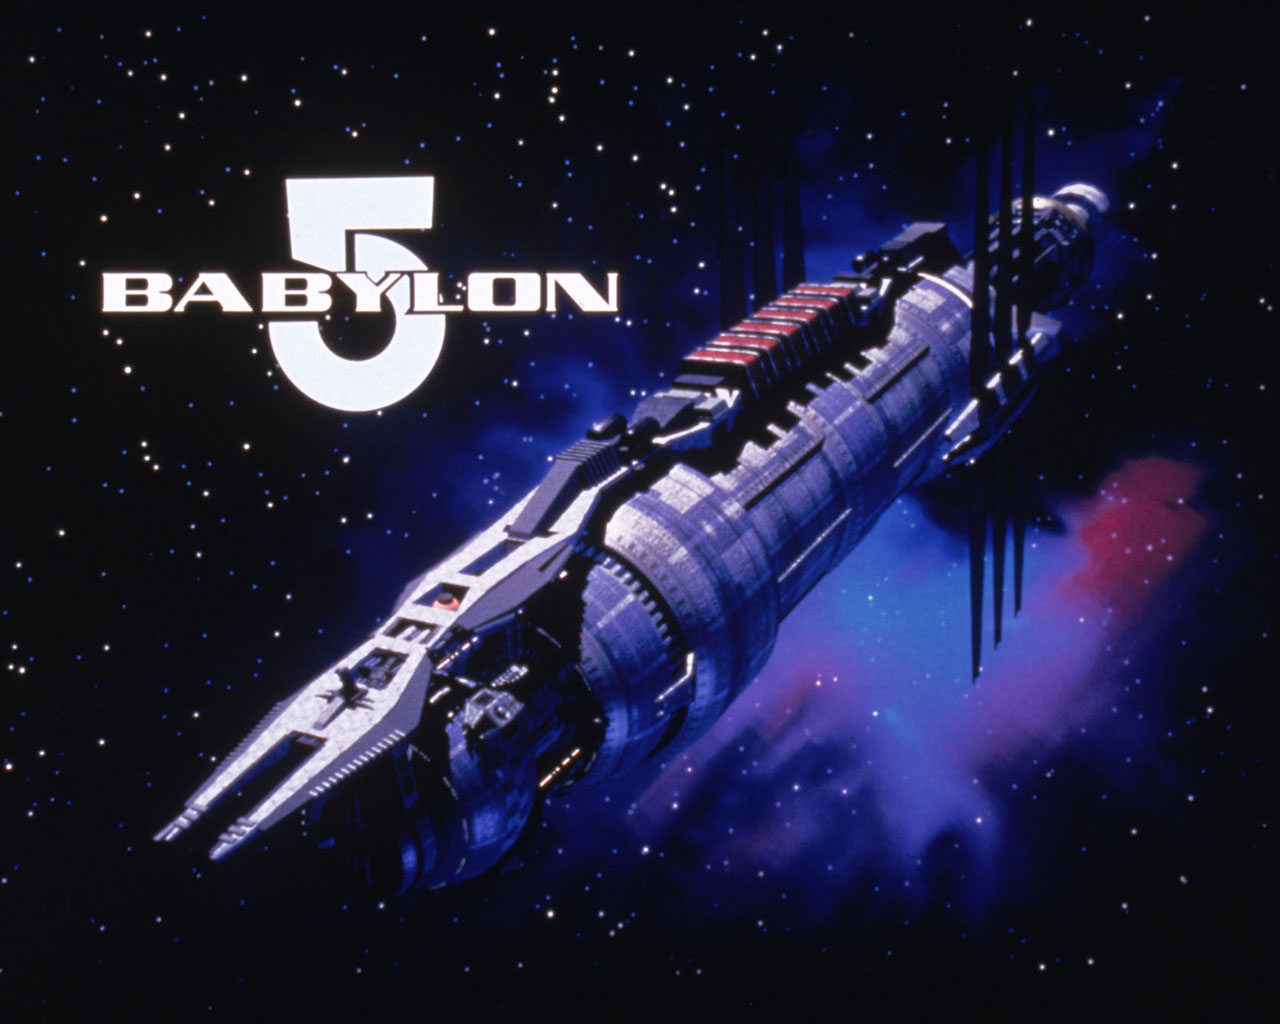 Babylon 5 Wallpaper 1280x1024 1280x1024